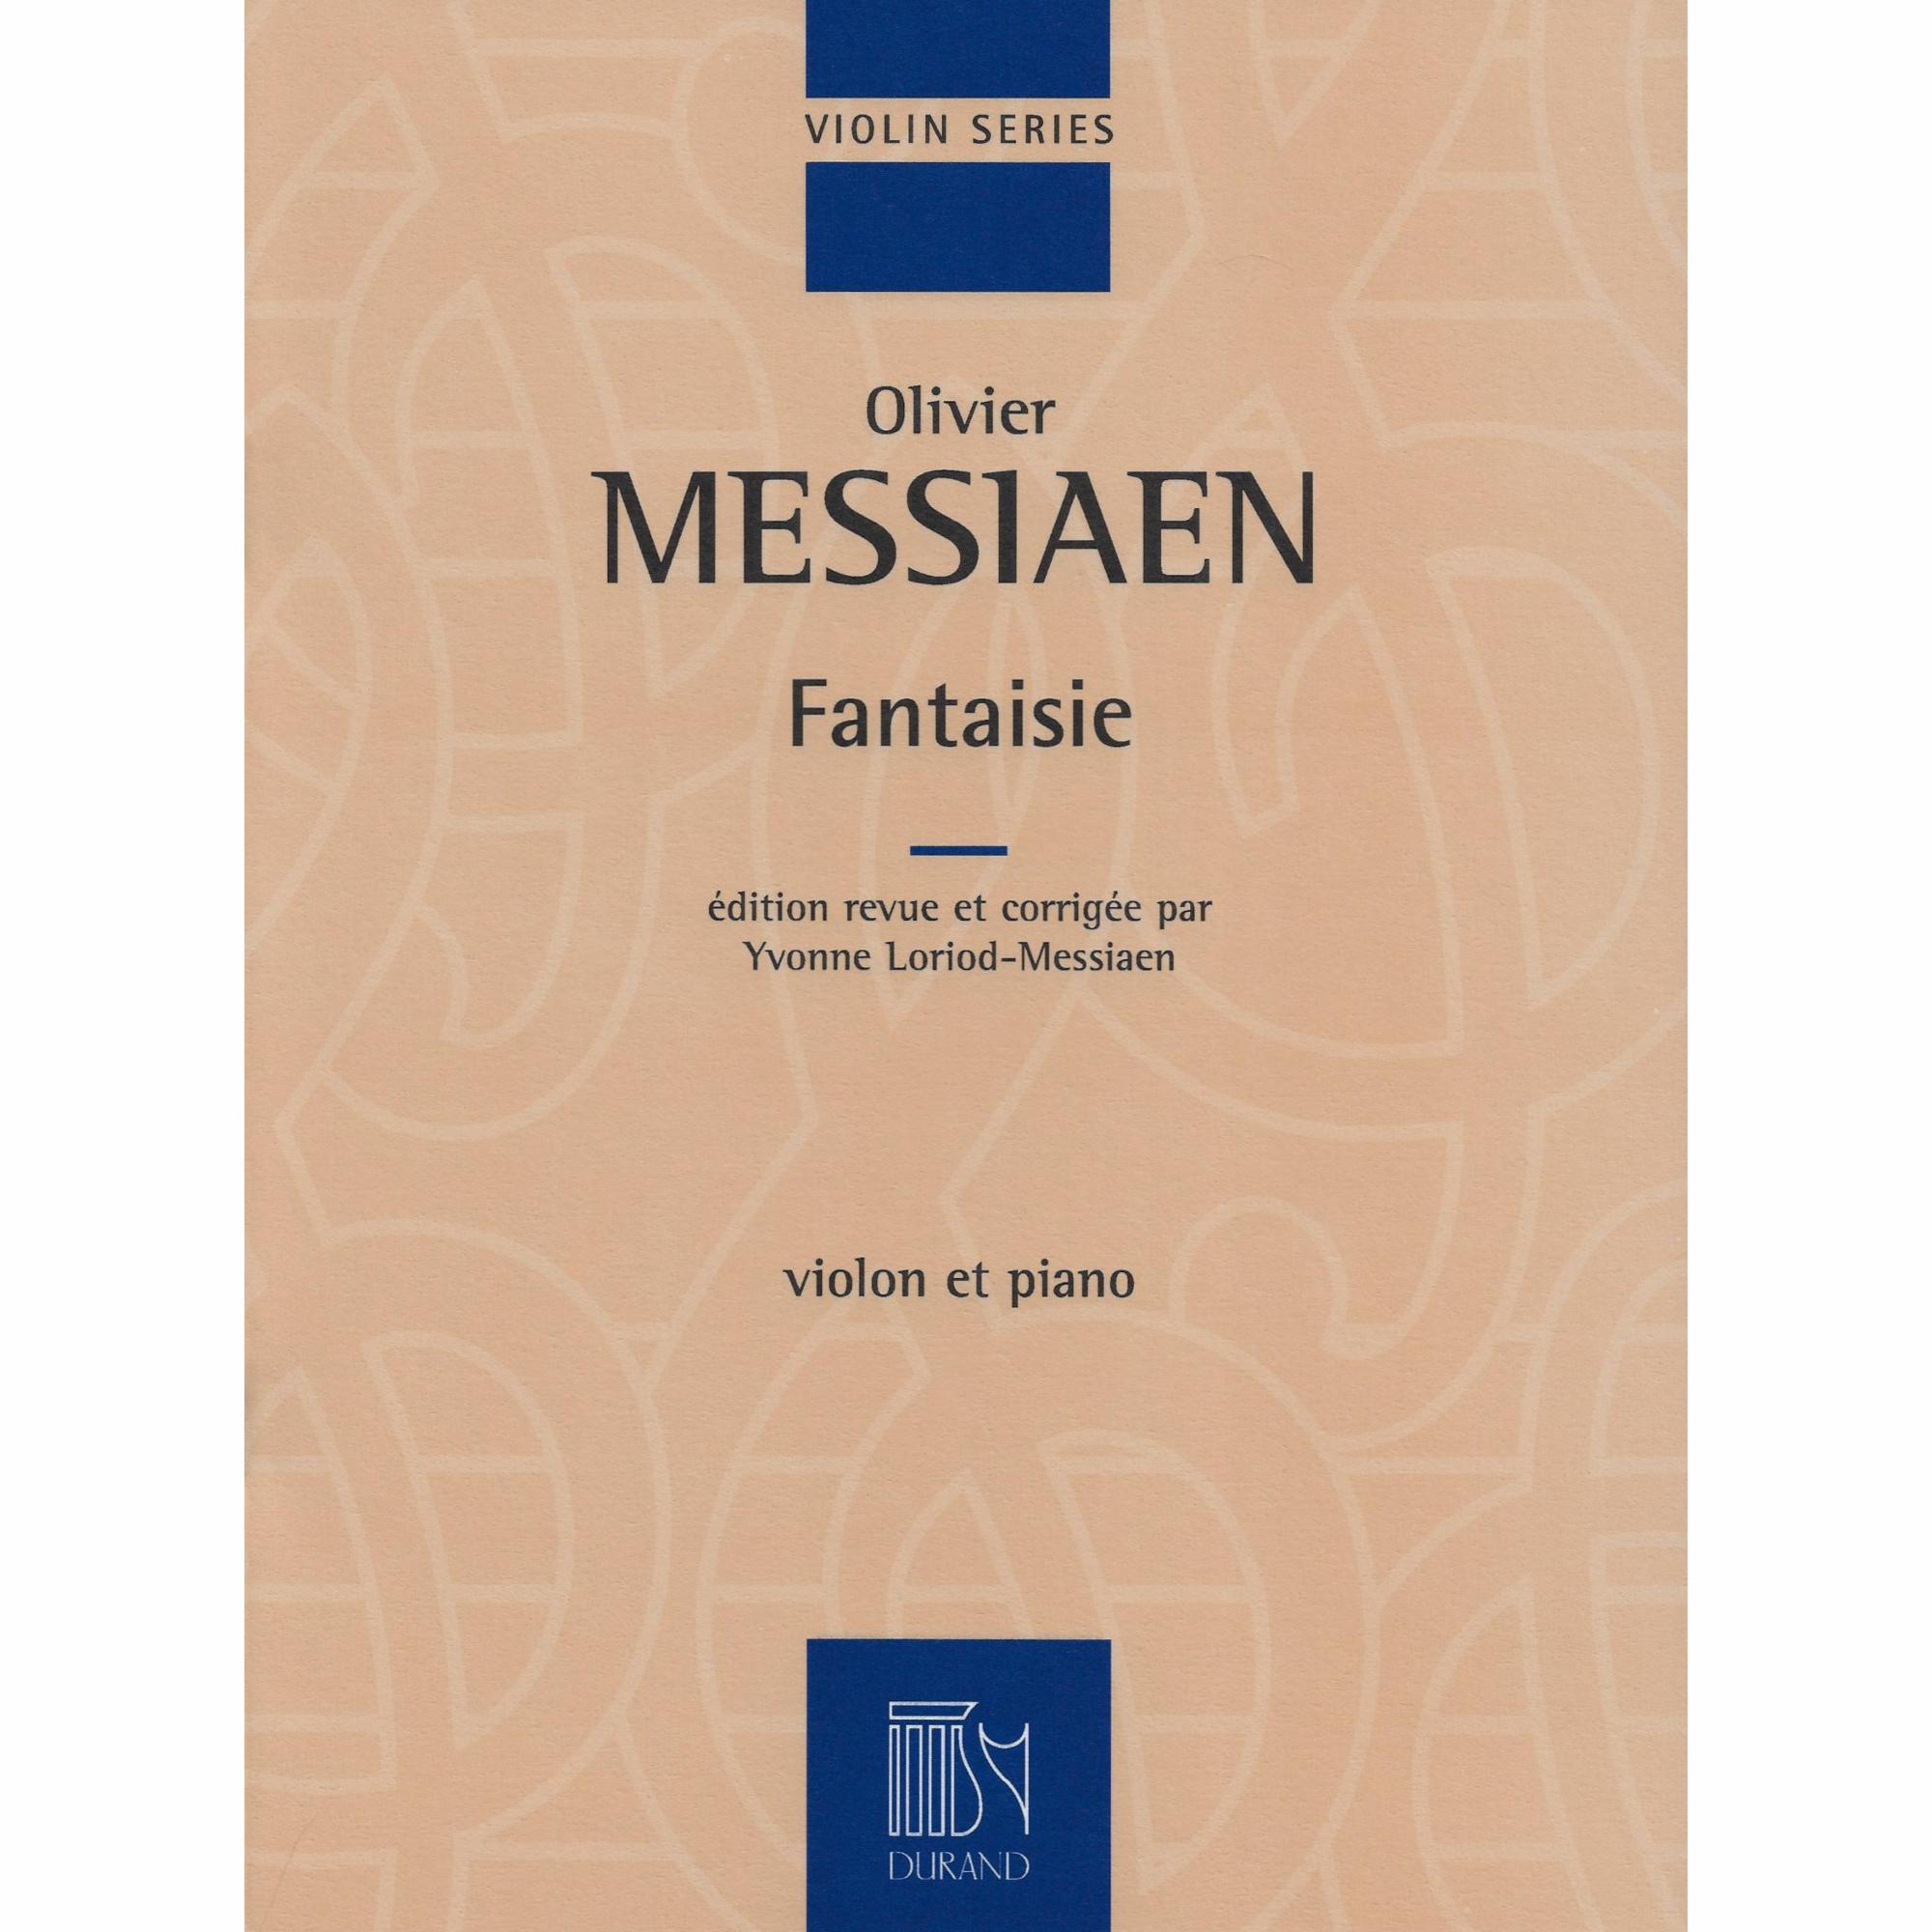 Messiaen -- Fantaisie for Violin and Piano